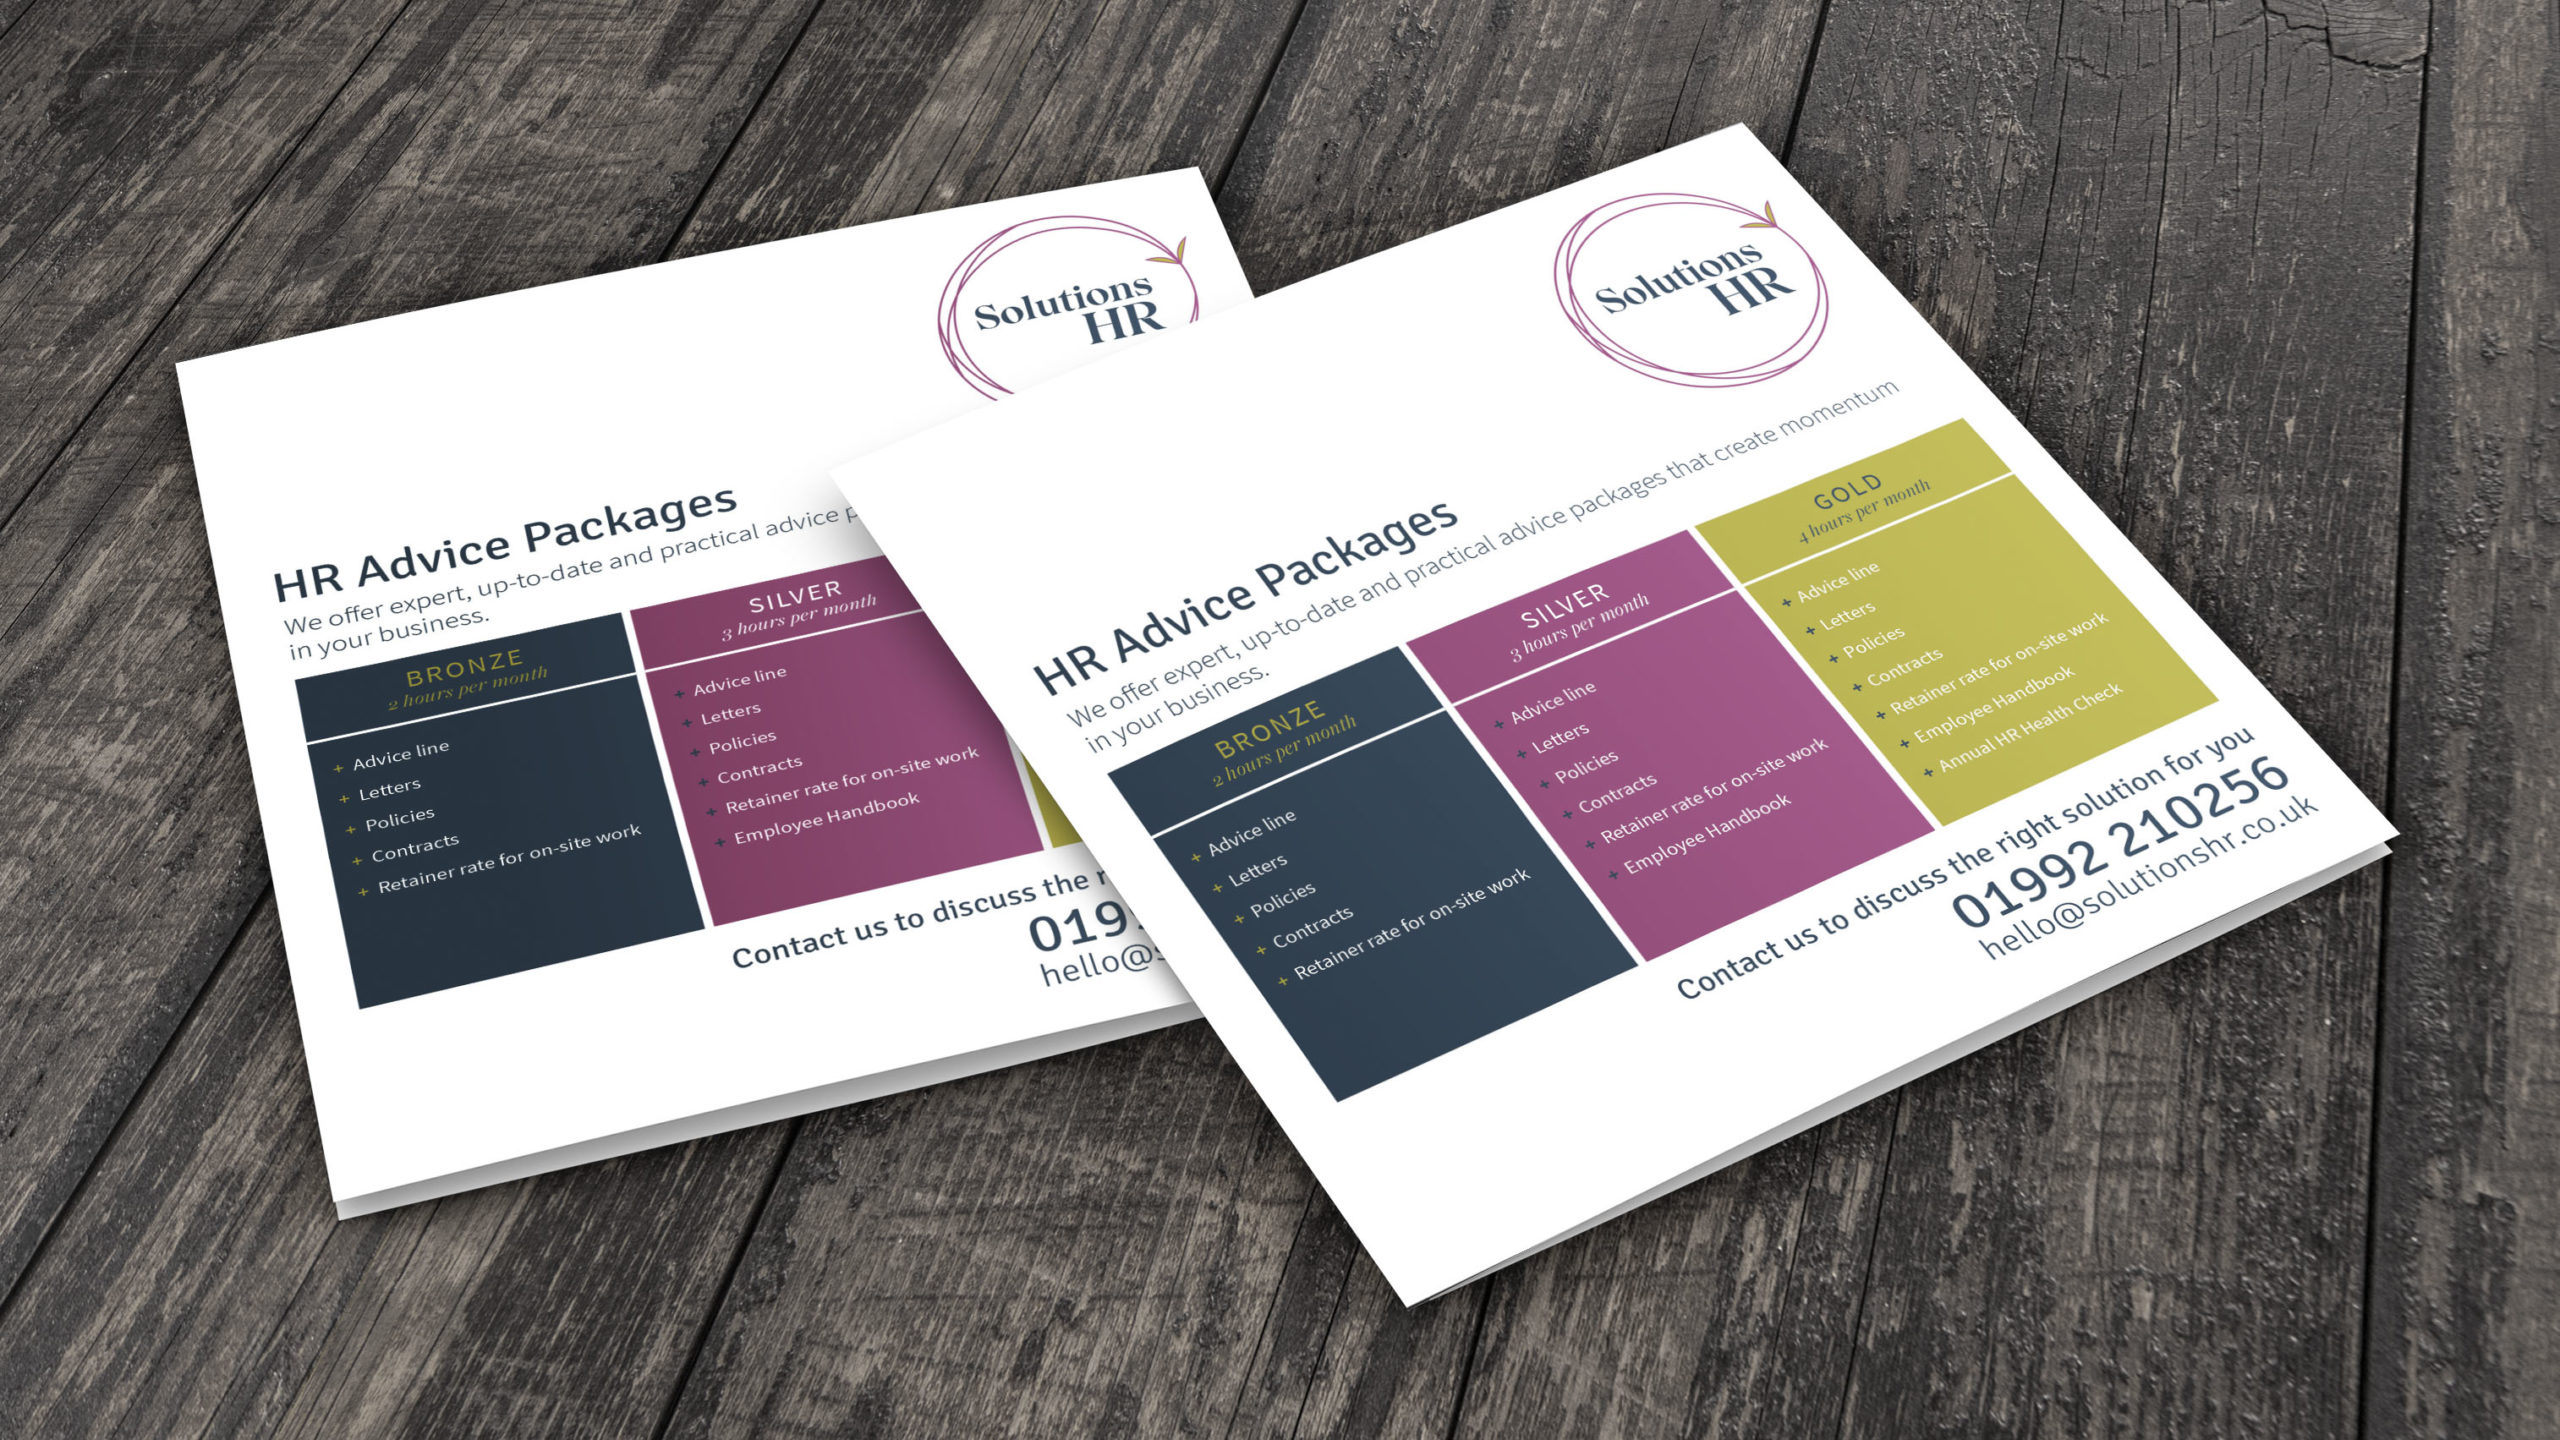 Solutions-HR-Packages-Leaflet-Mockup-scaled